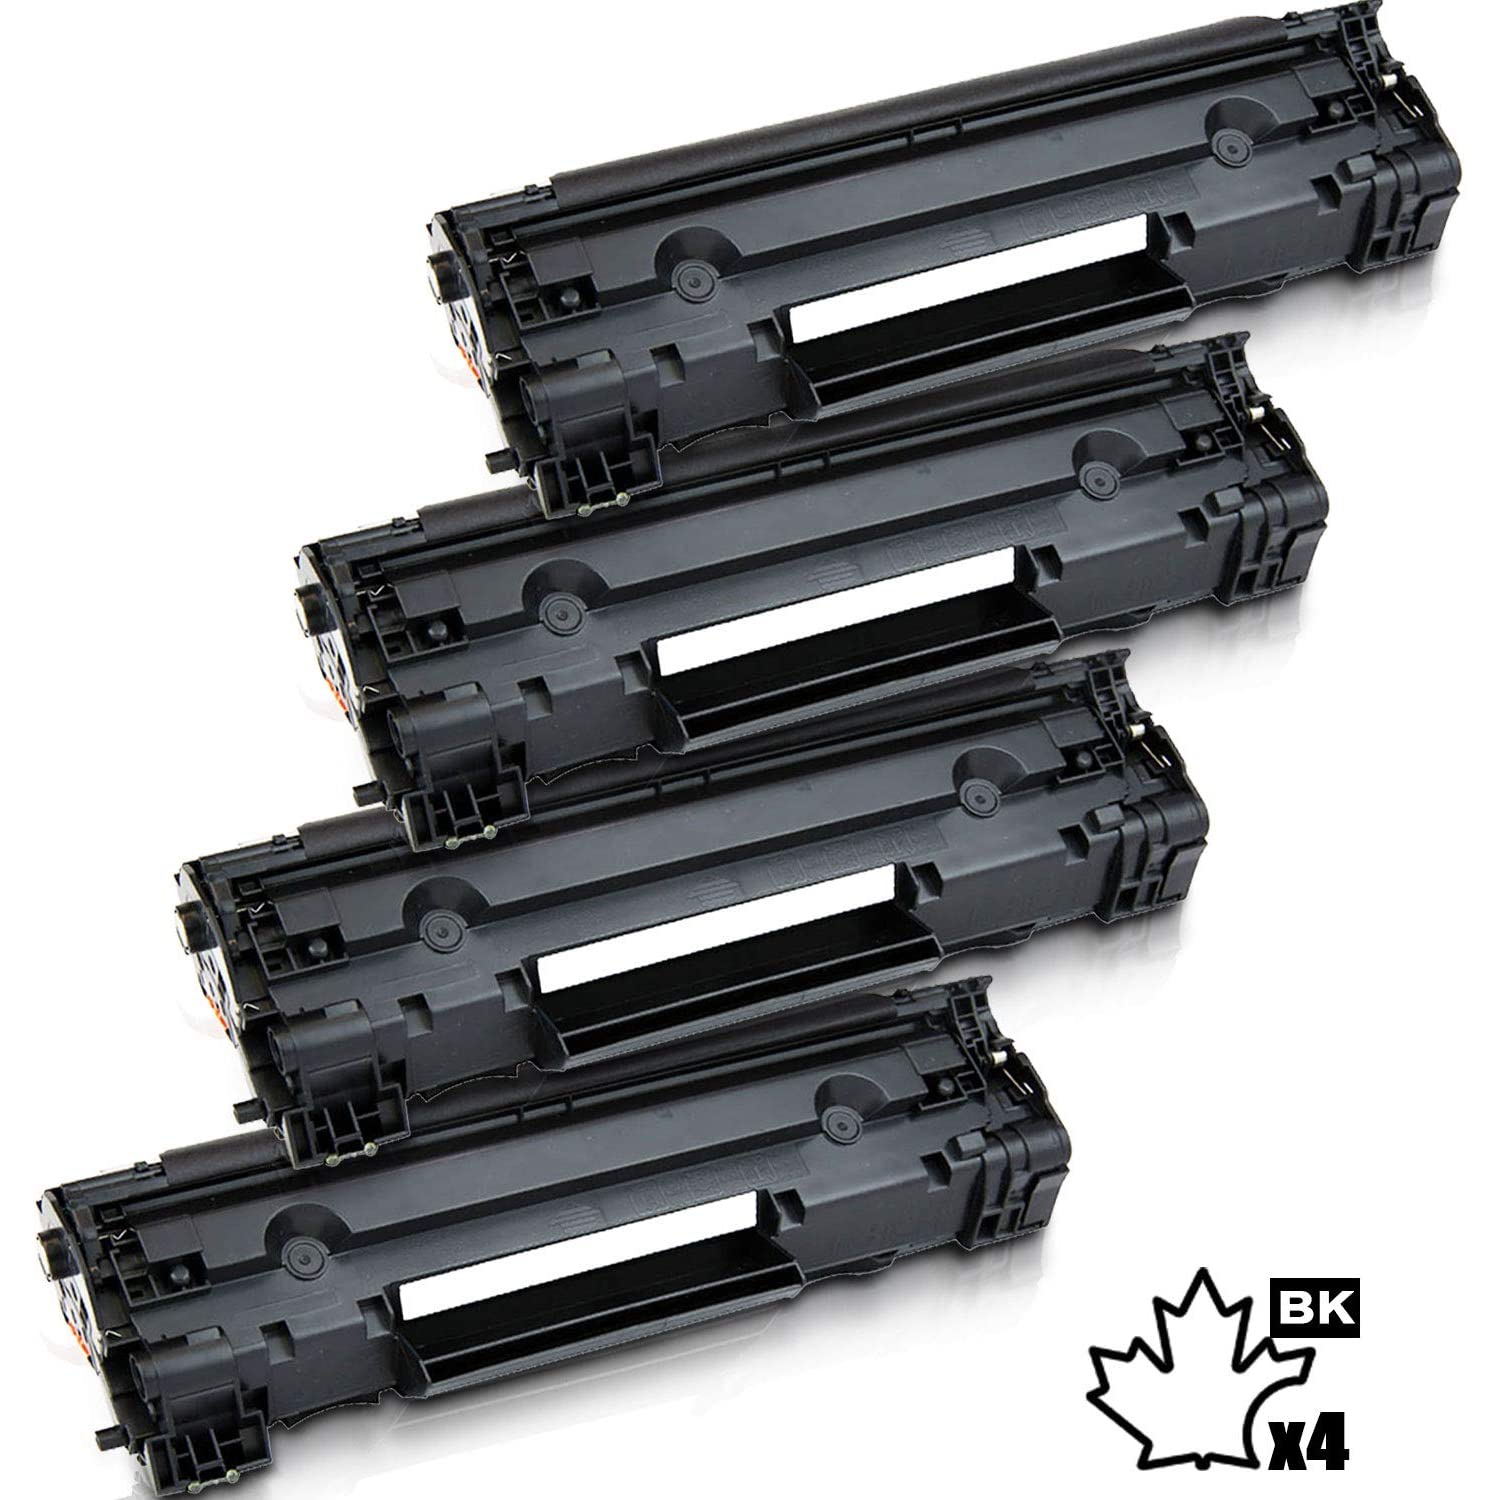 4 Inkfirst Compatible Toner Cartridges Replacement for HP CF283A 83A LaserJet Pro M125rnw M125nw M201dw M201n M225dw M127fn